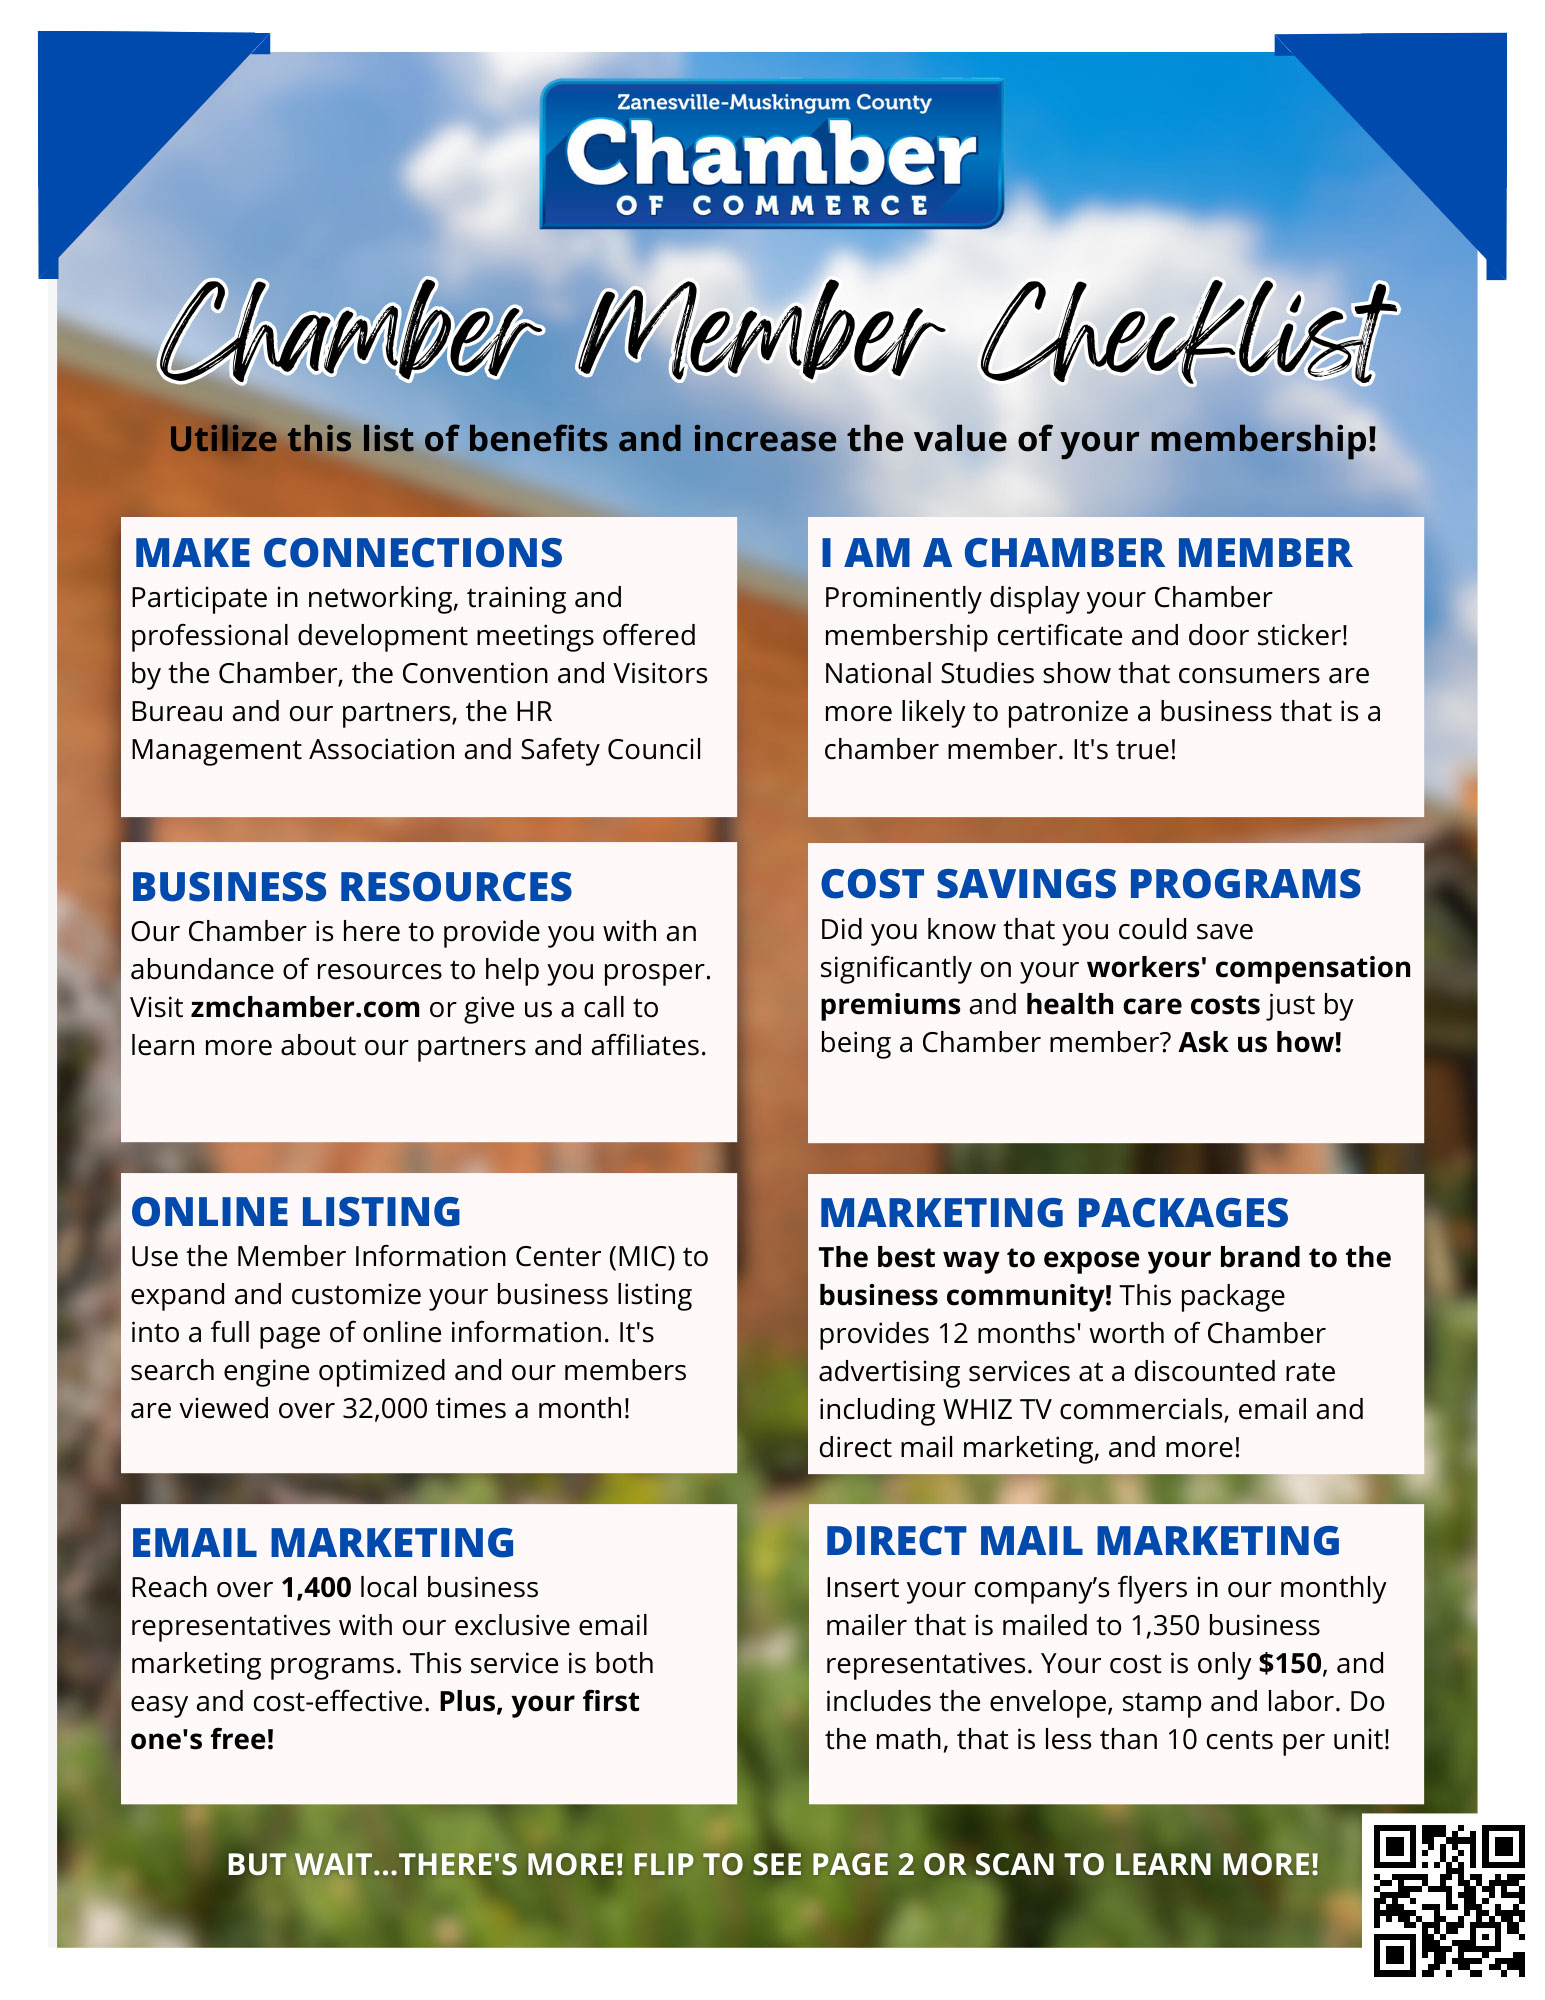 ZM Chamber Member Benefit Checklist P1